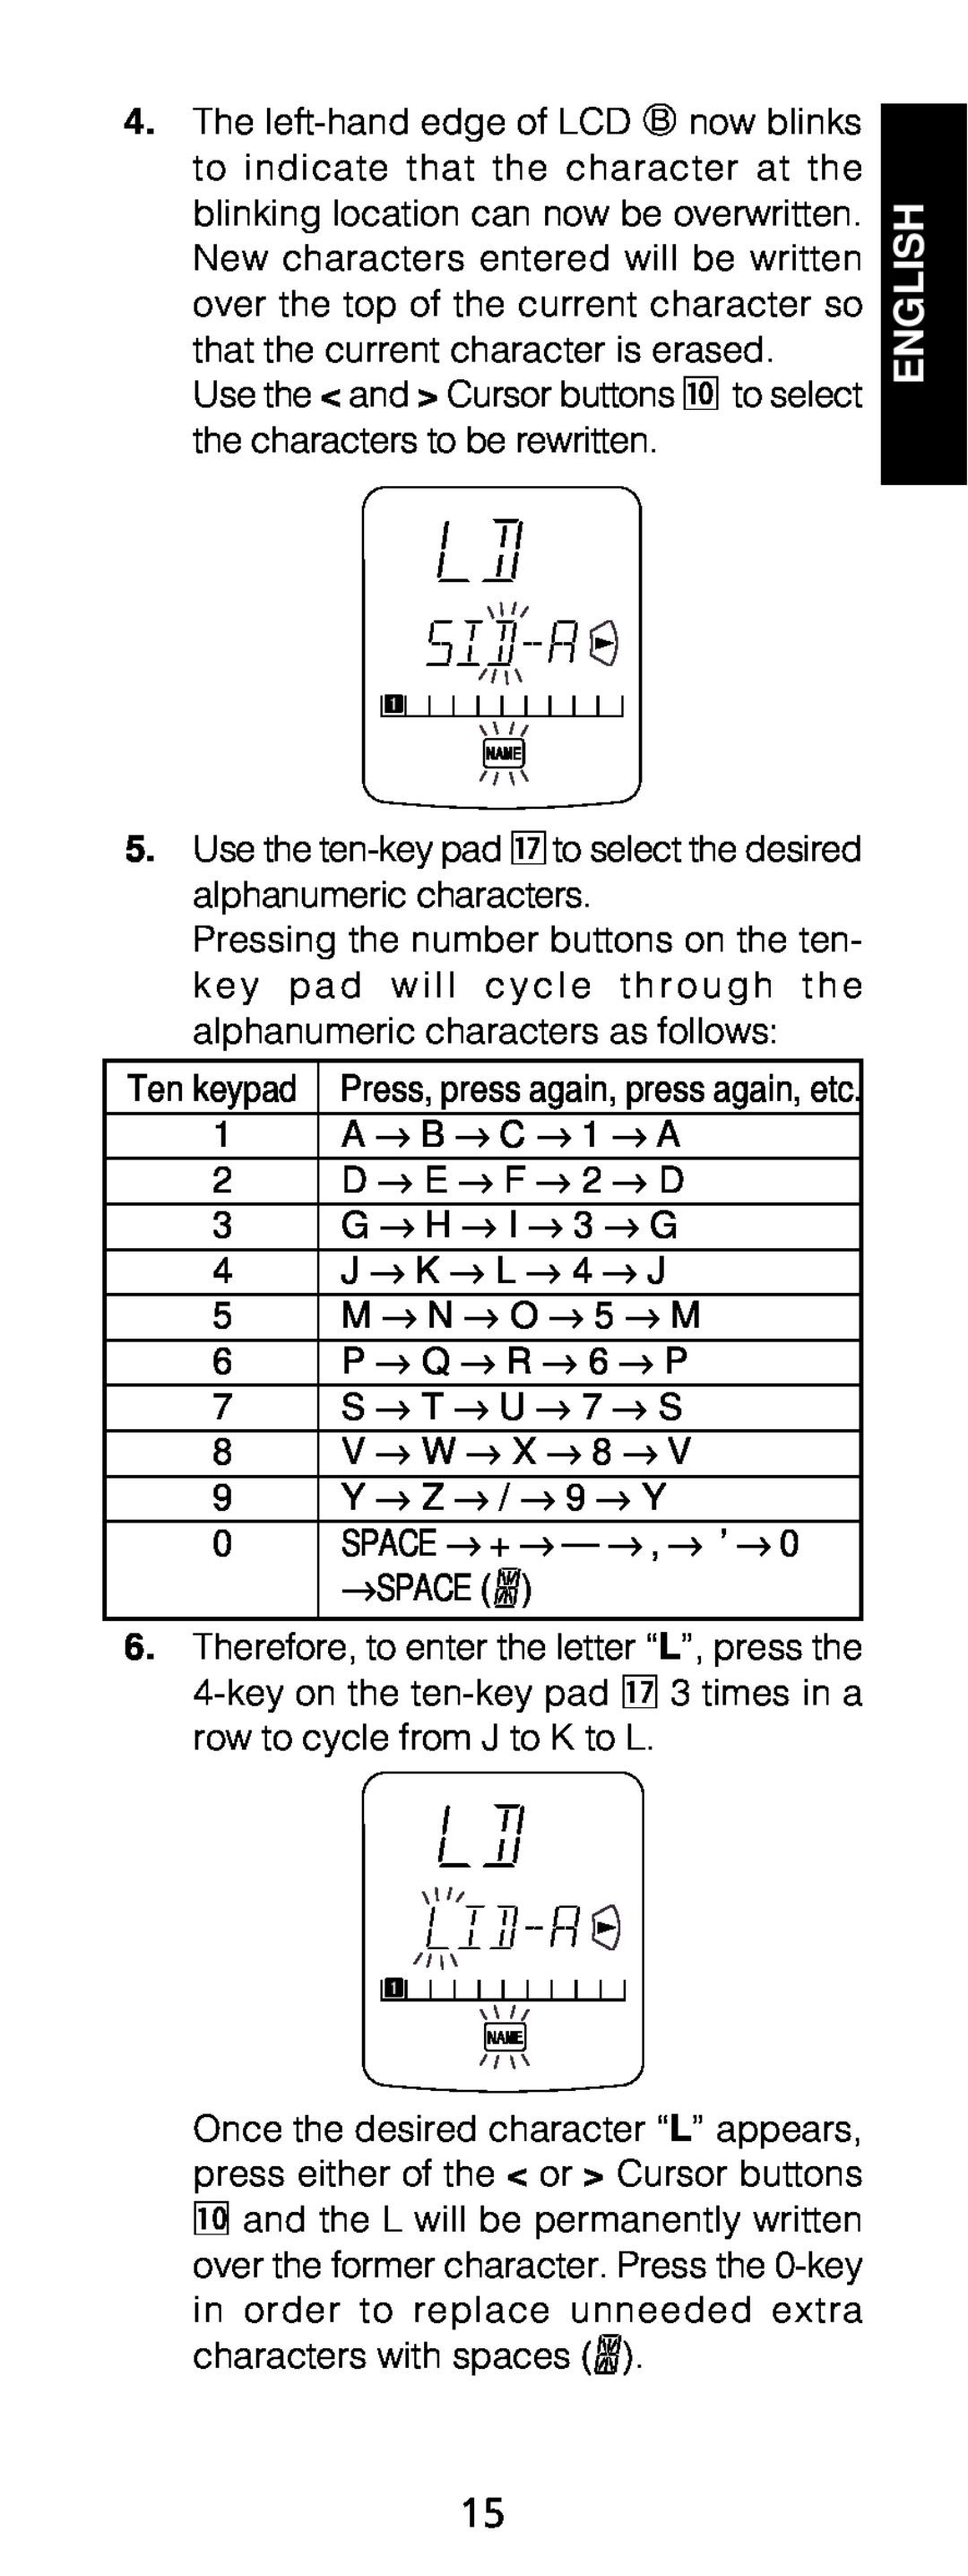 Marantz RC1200 manual English, Use the ten-key pad ⁄7to select the desired alphanumeric characters 